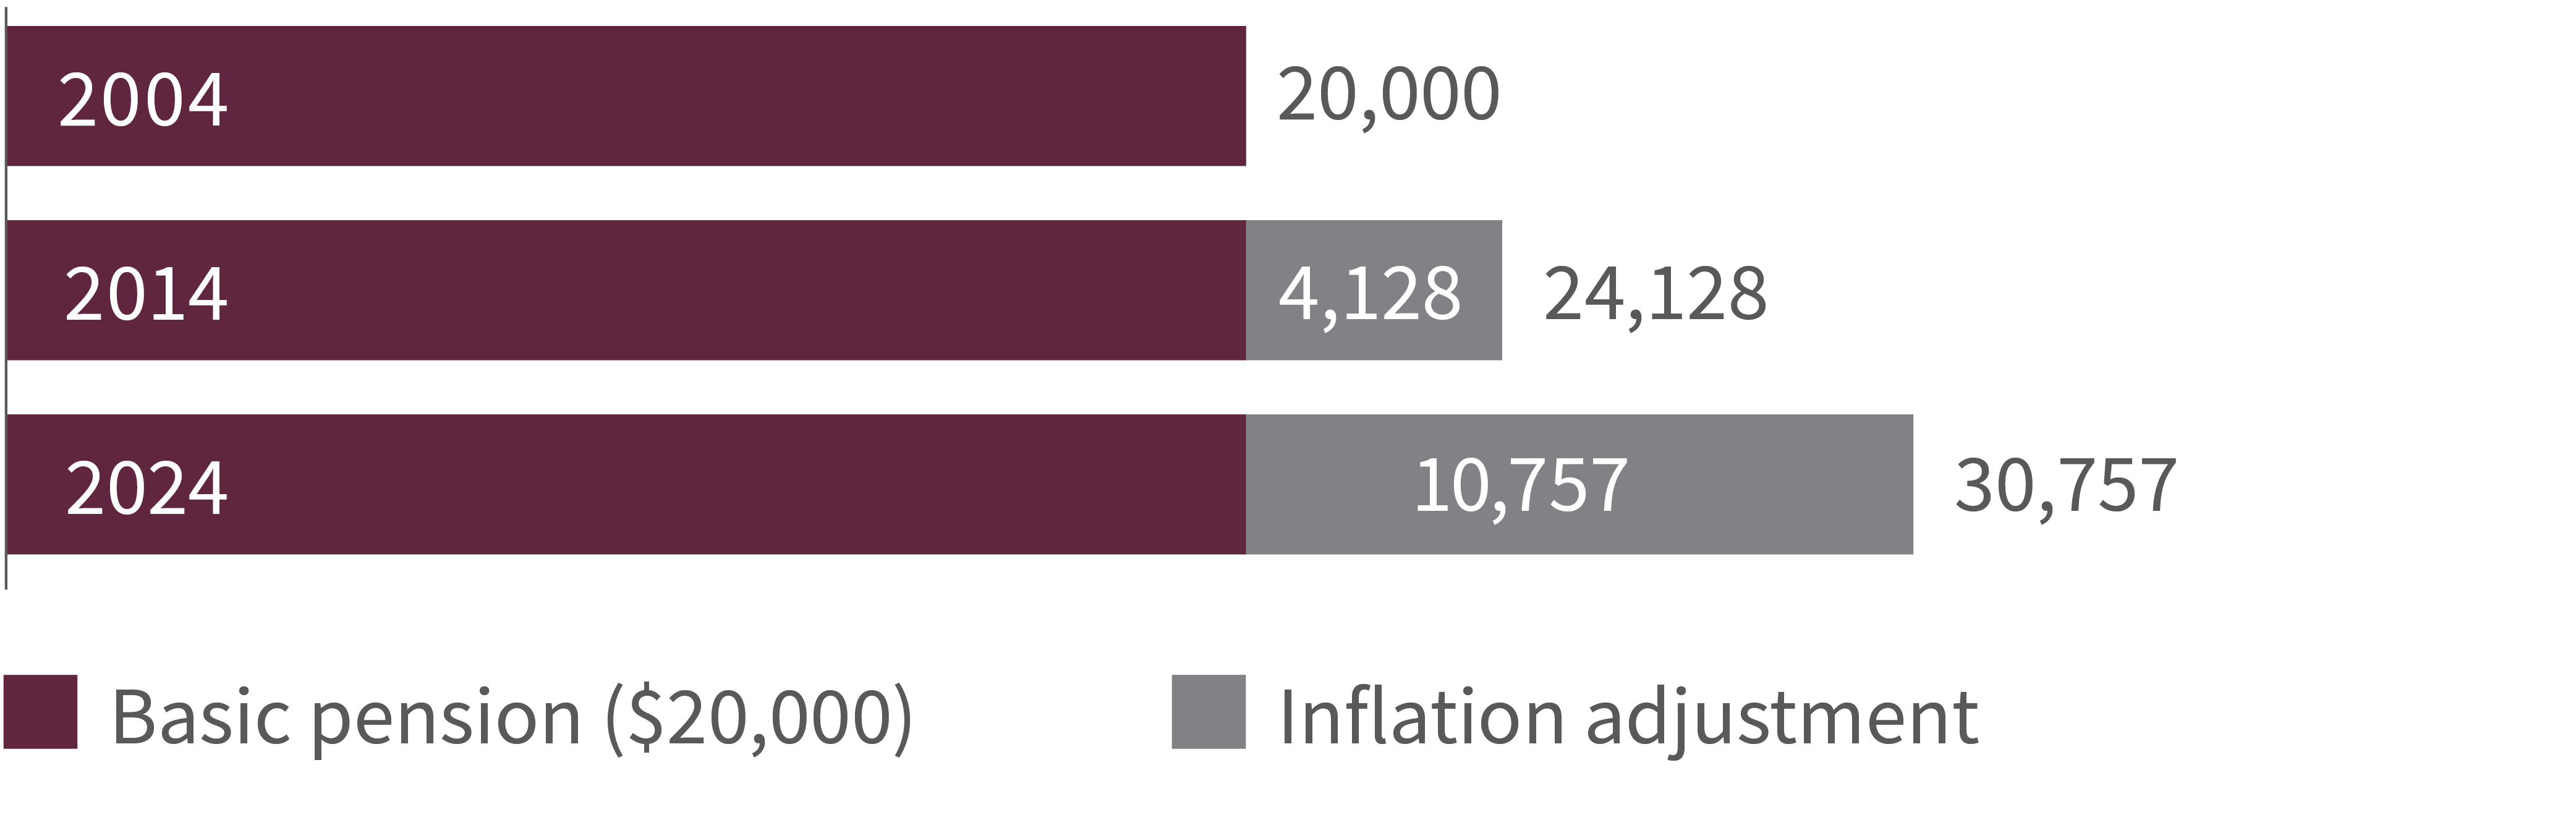 Basic pension plus inflation adjustment granted ($)